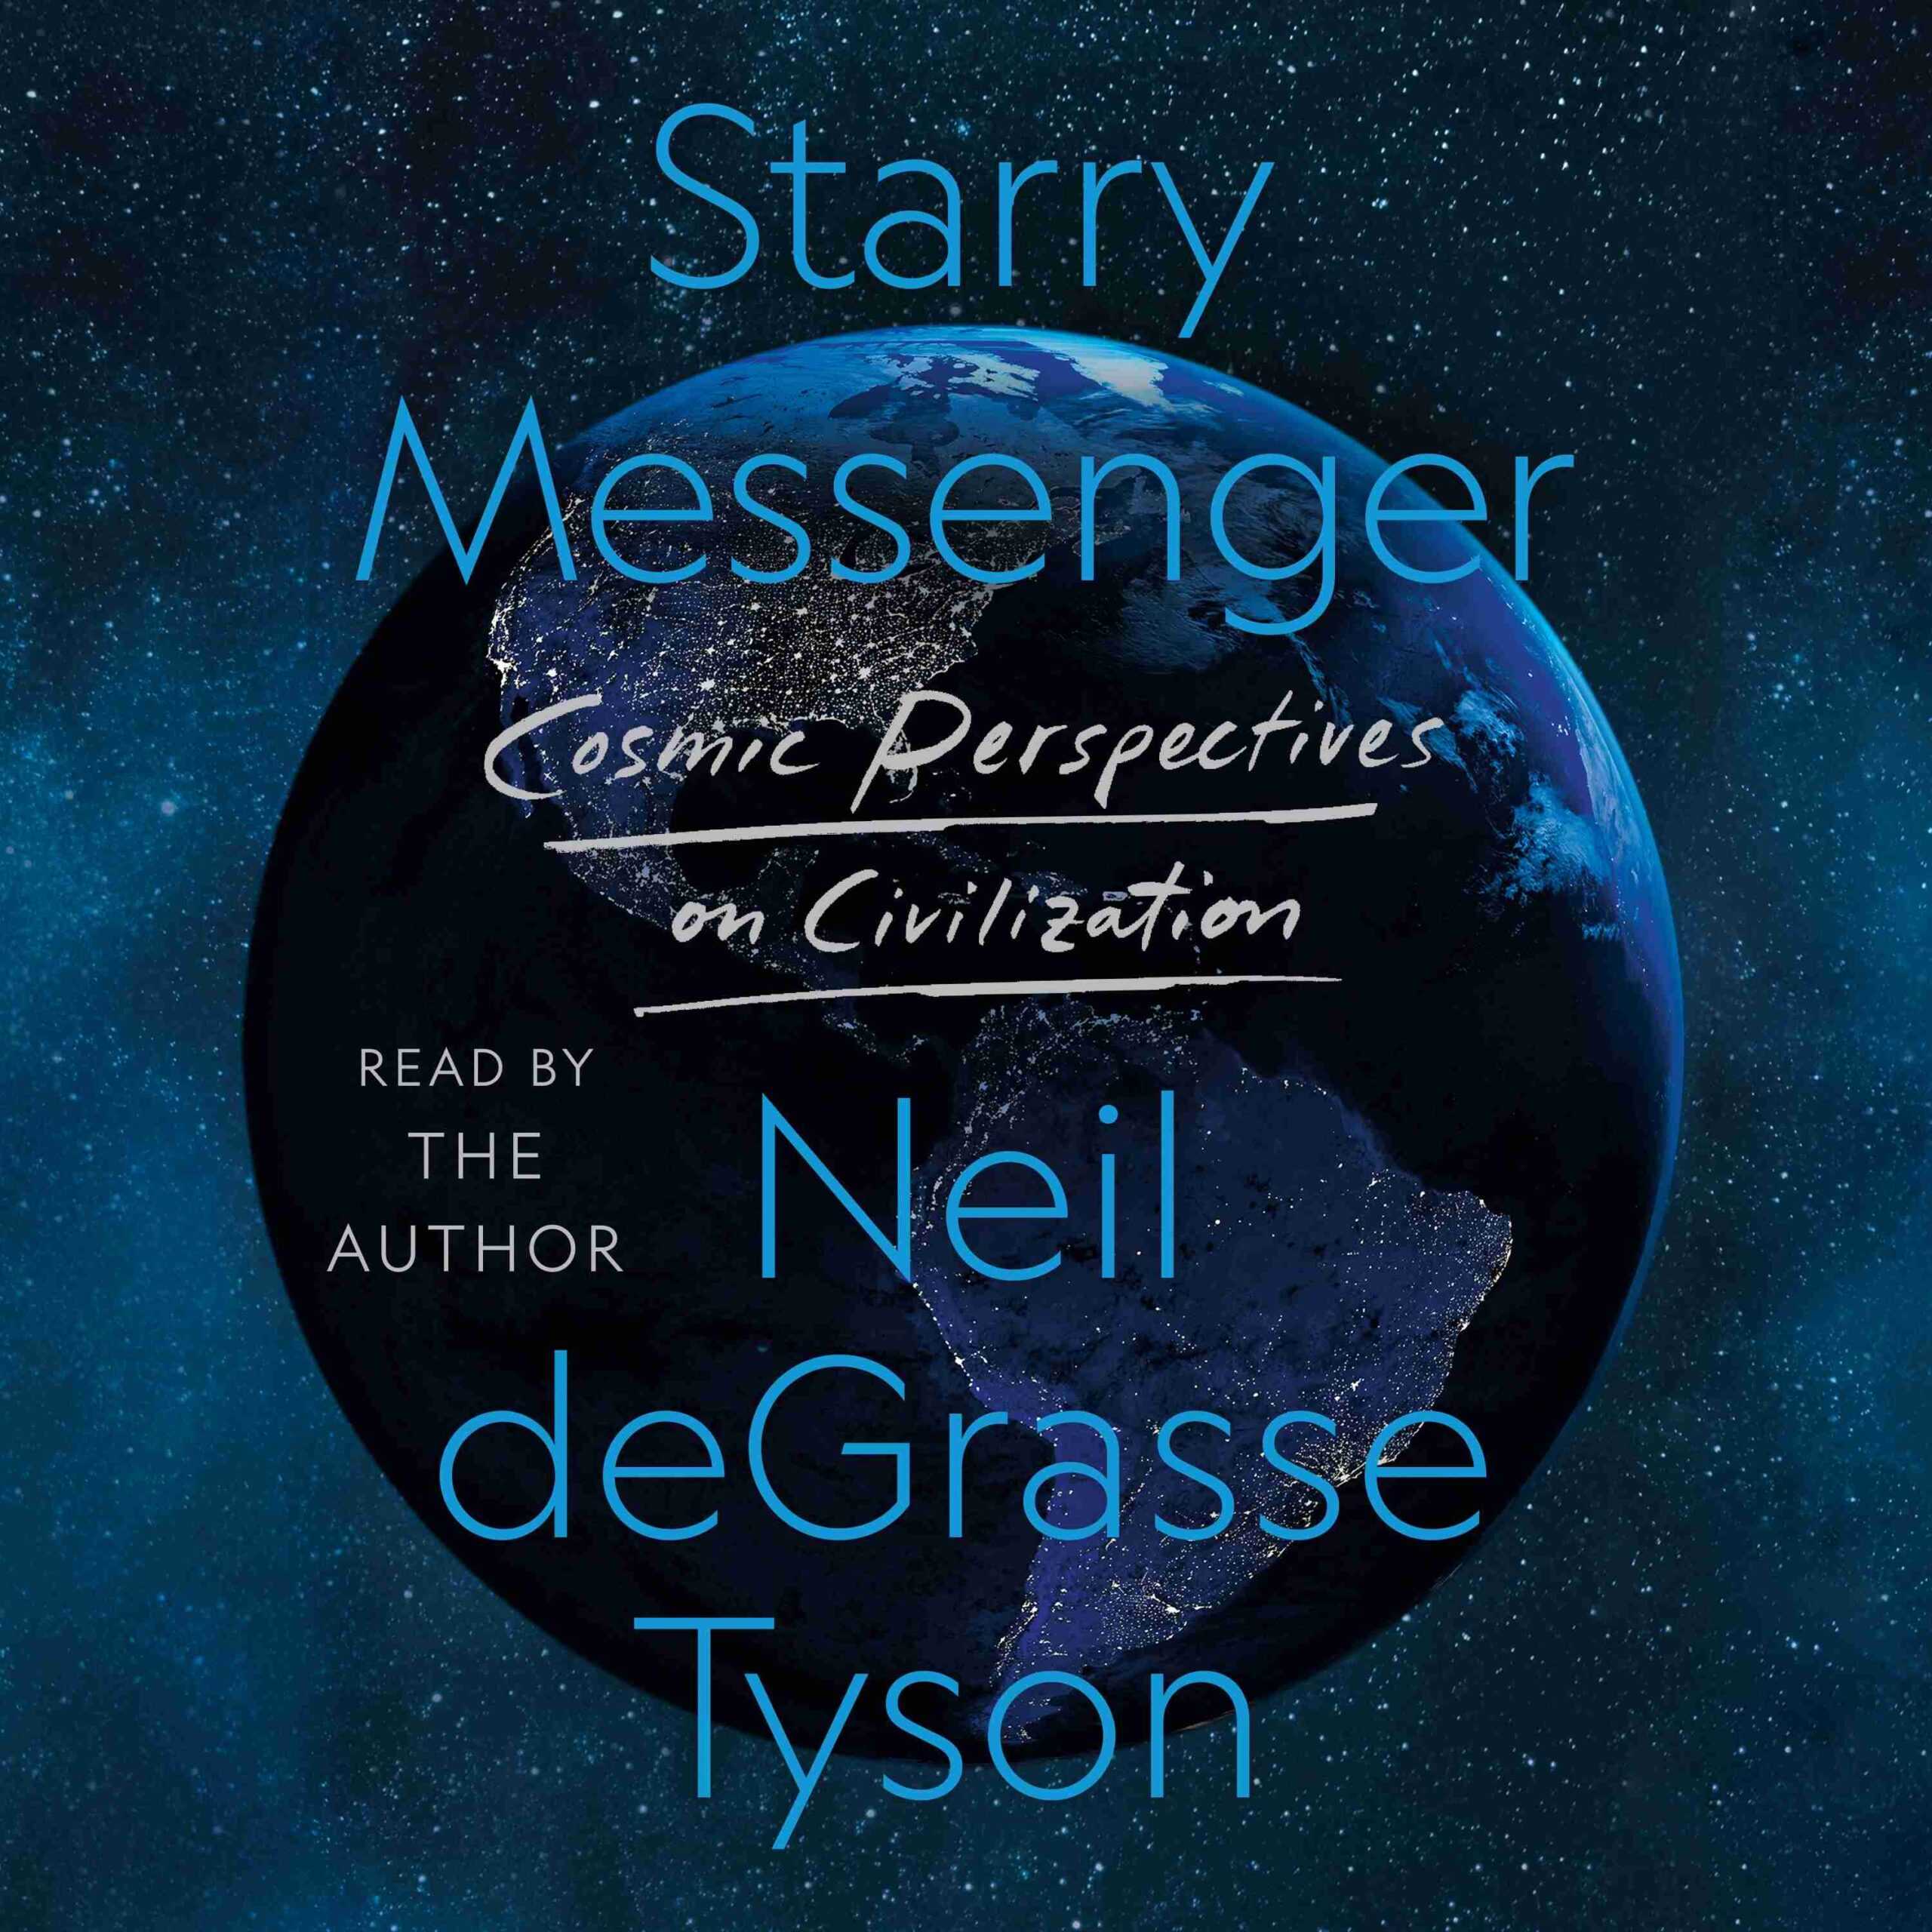 Starry Messenger byNeil deGrasse Tyson Audiobook. 19.99 USD